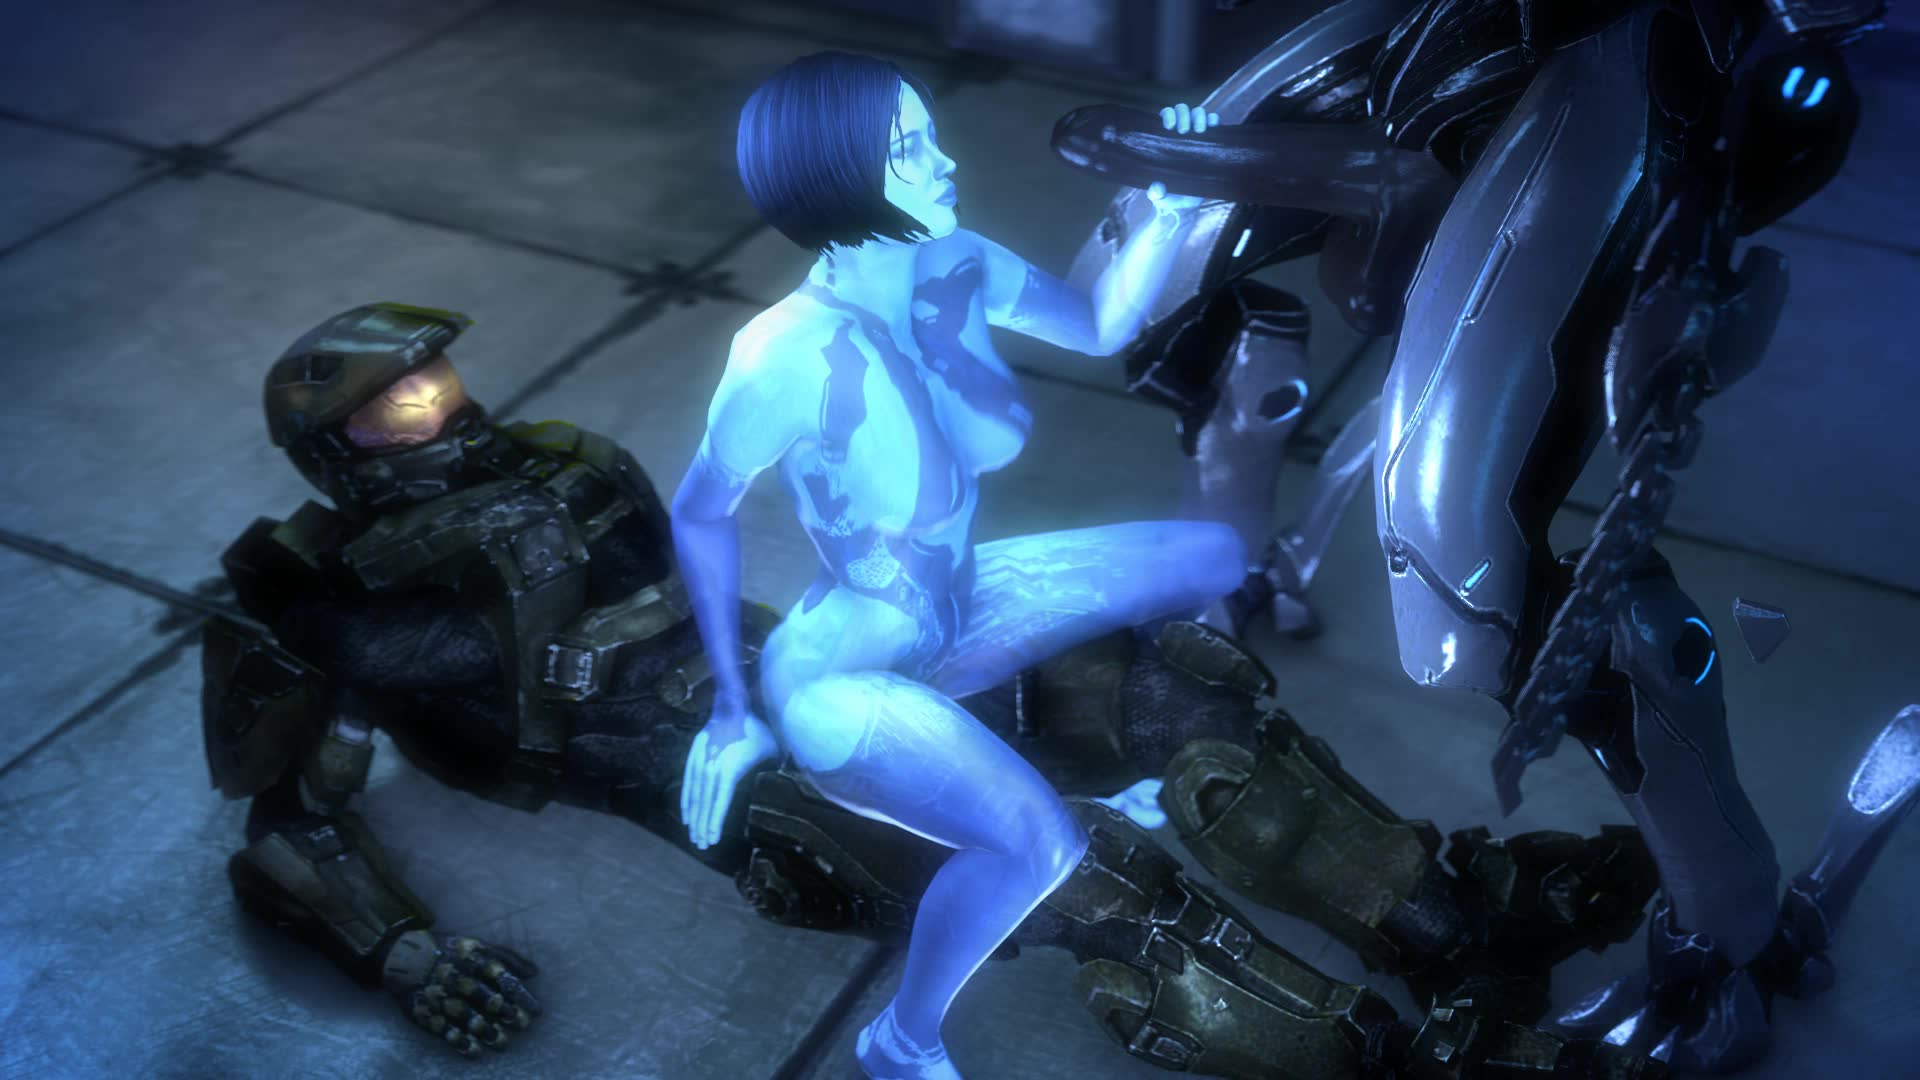 Cortana Gives Blowjob And Rides Huge Dick Together – Halo NSFW animation thumbnail